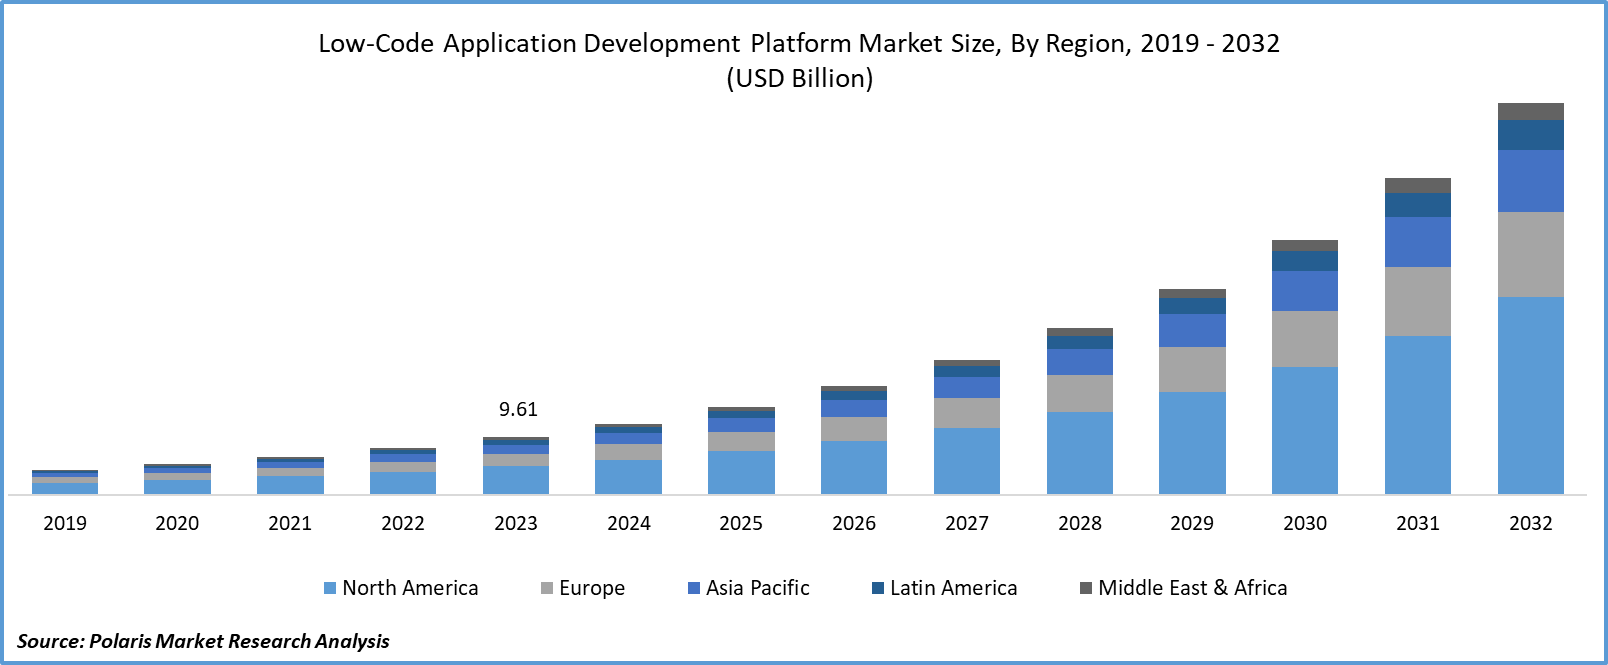 Low-Code Application Development Platform Market Size